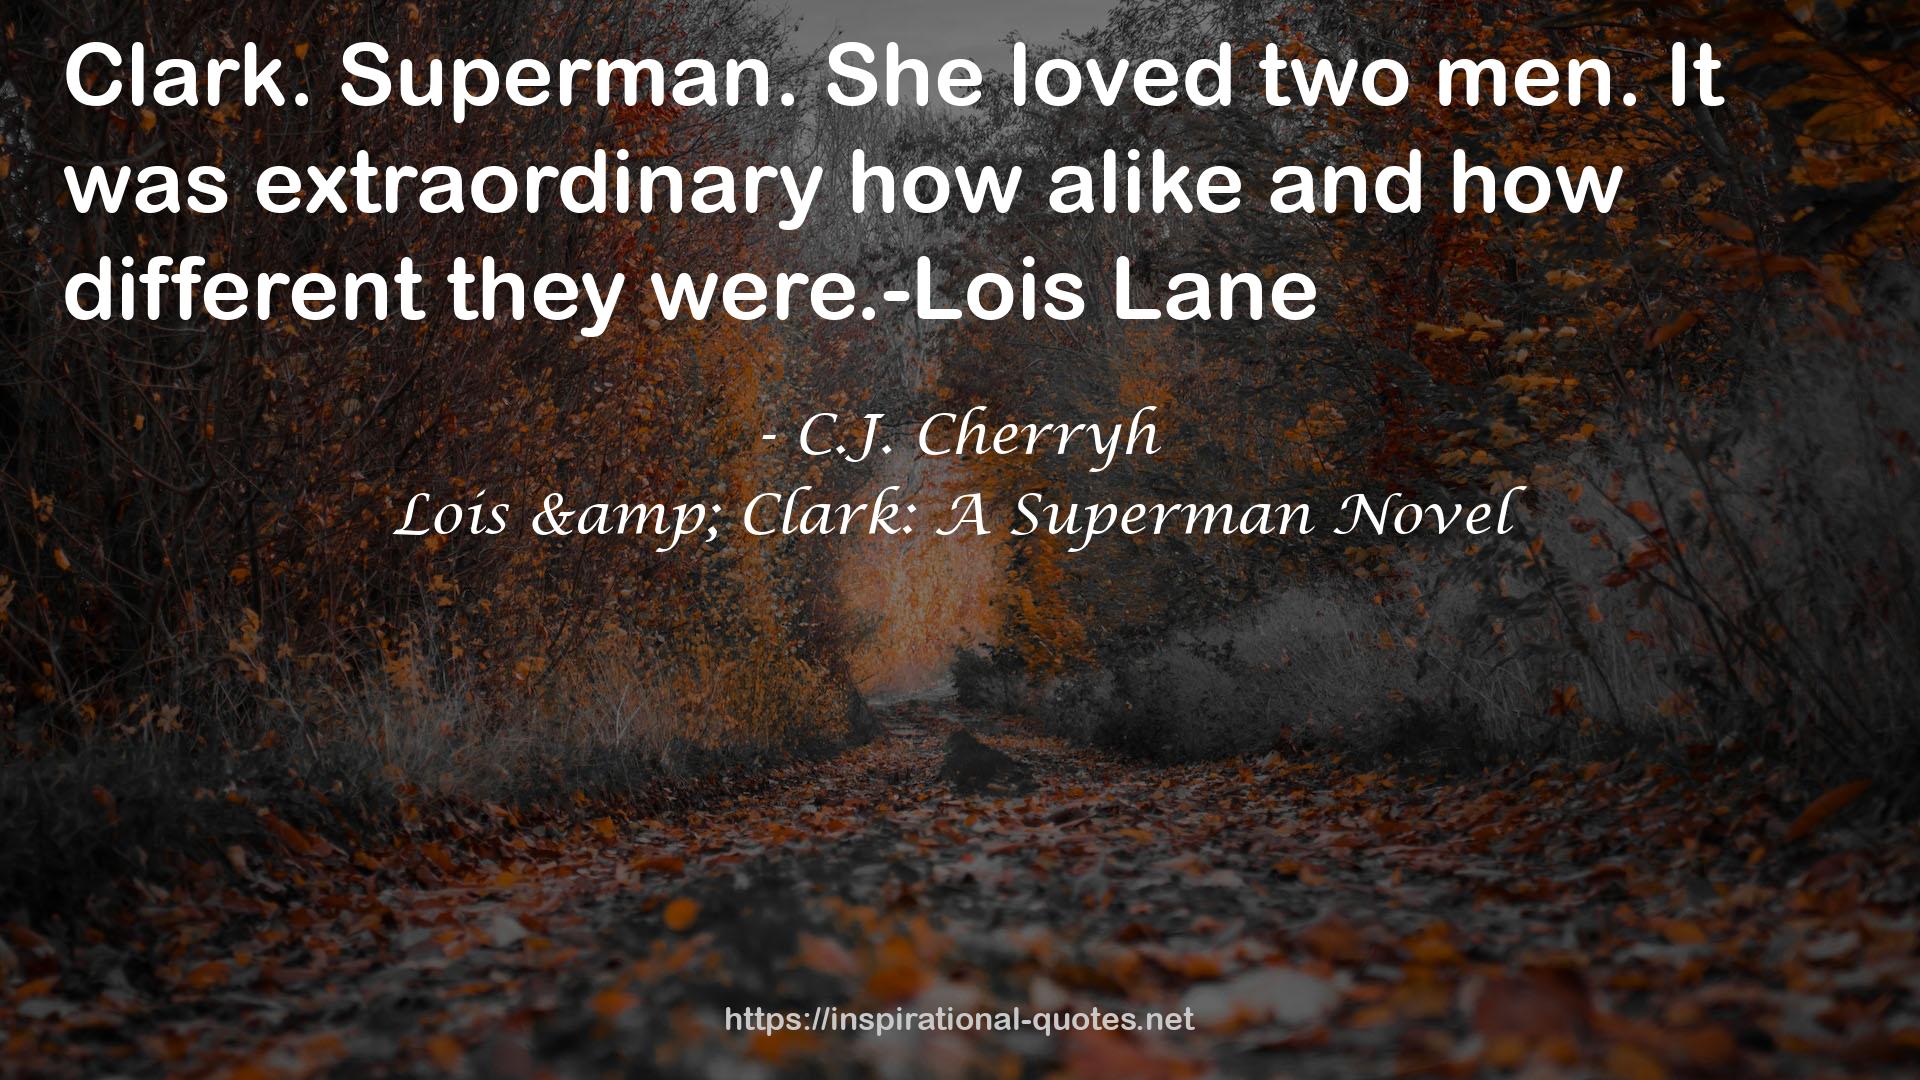 Lois & Clark: A Superman Novel QUOTES